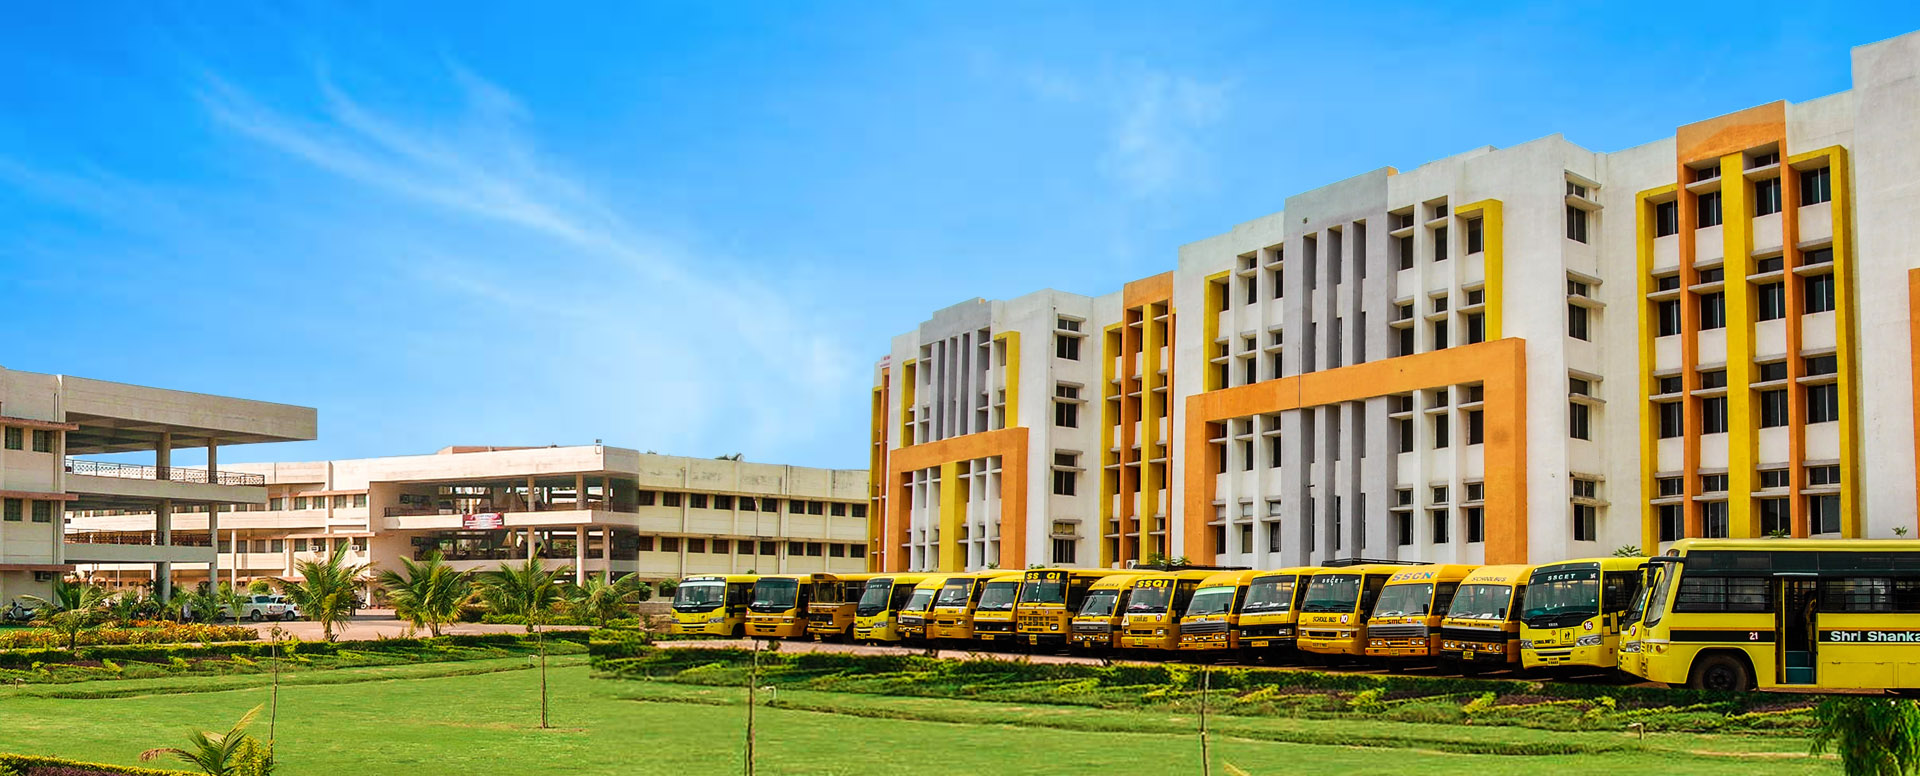 Shri Shankaracharya Engineering College Image